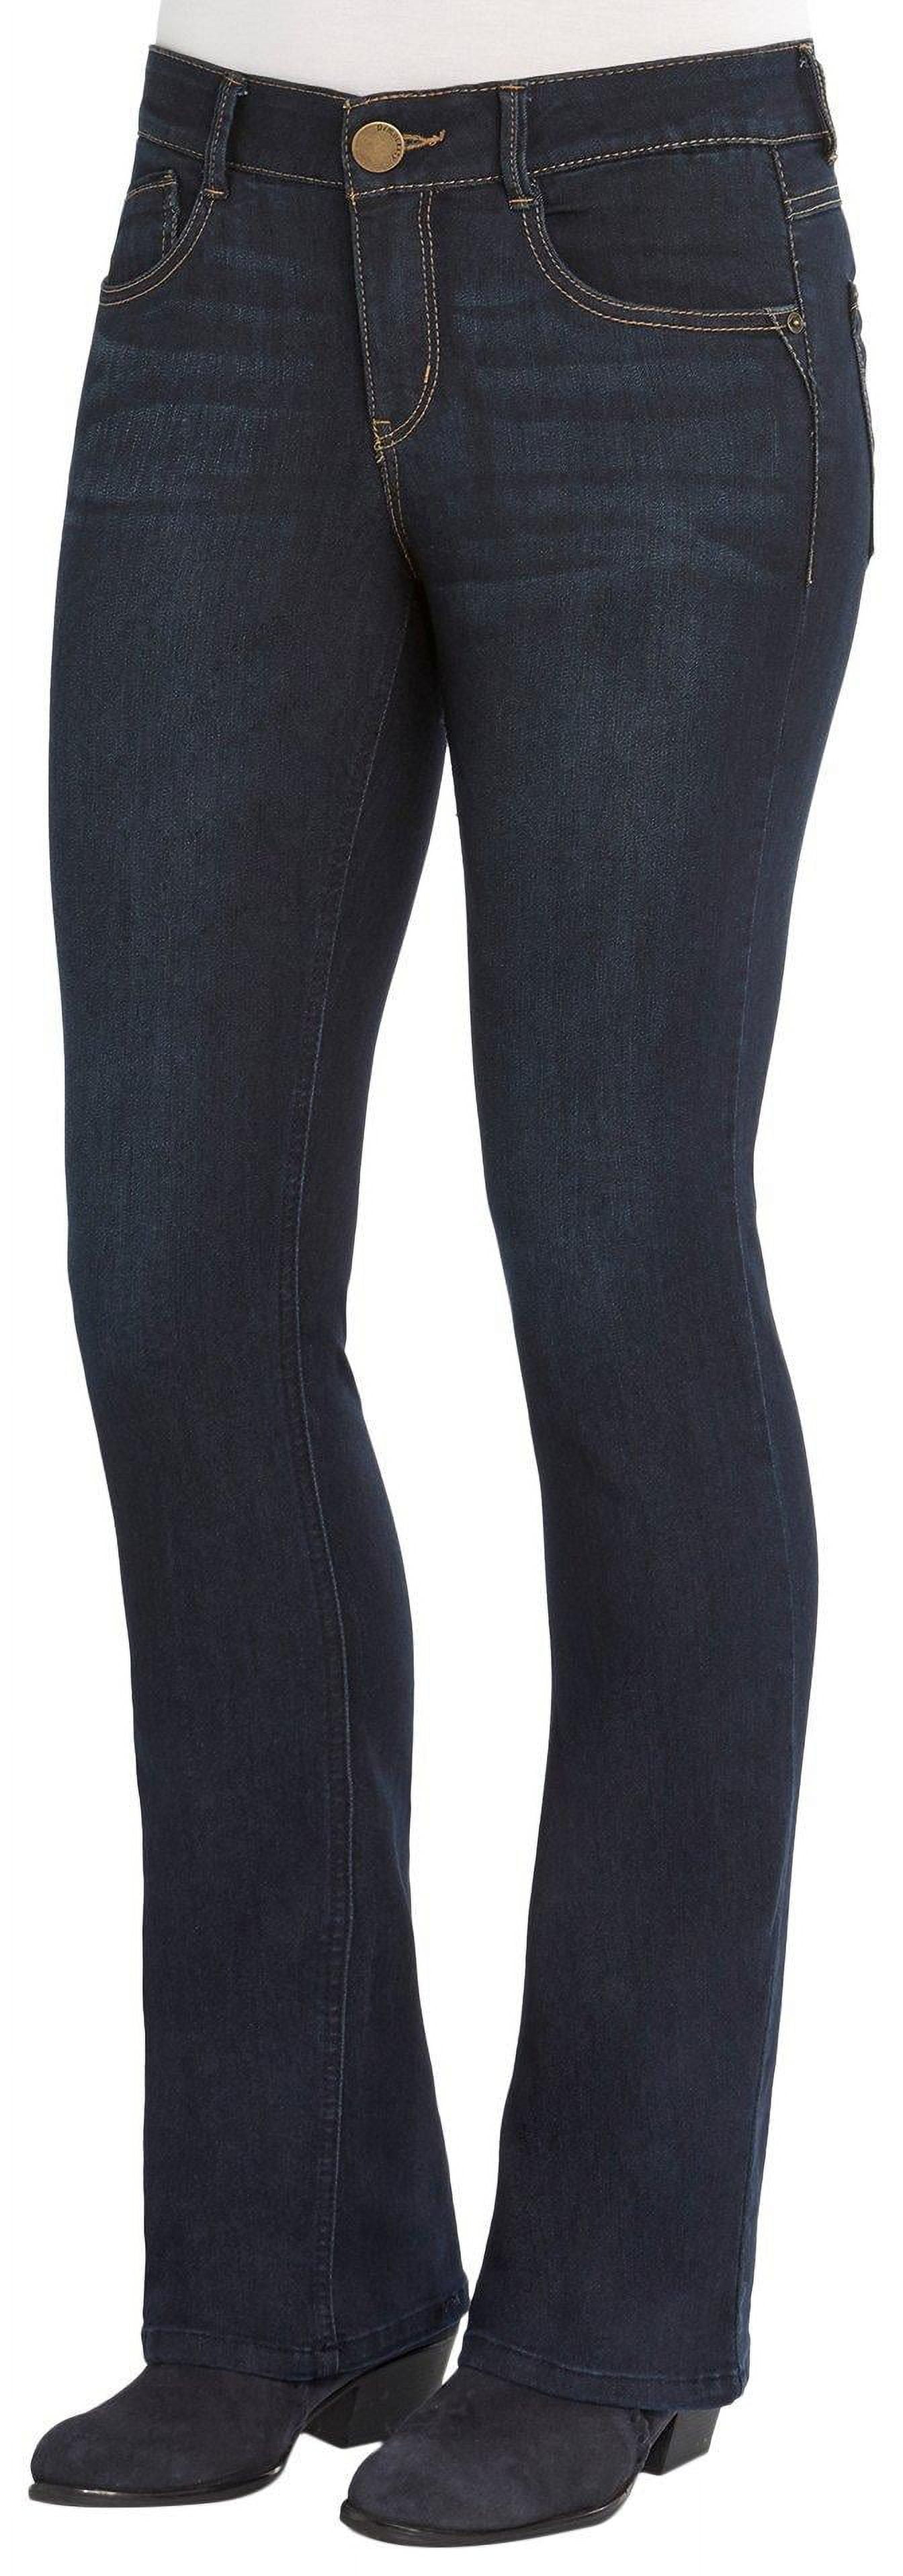 Womens Indigo Stretch Ab Solution Jegging Jeans 6 